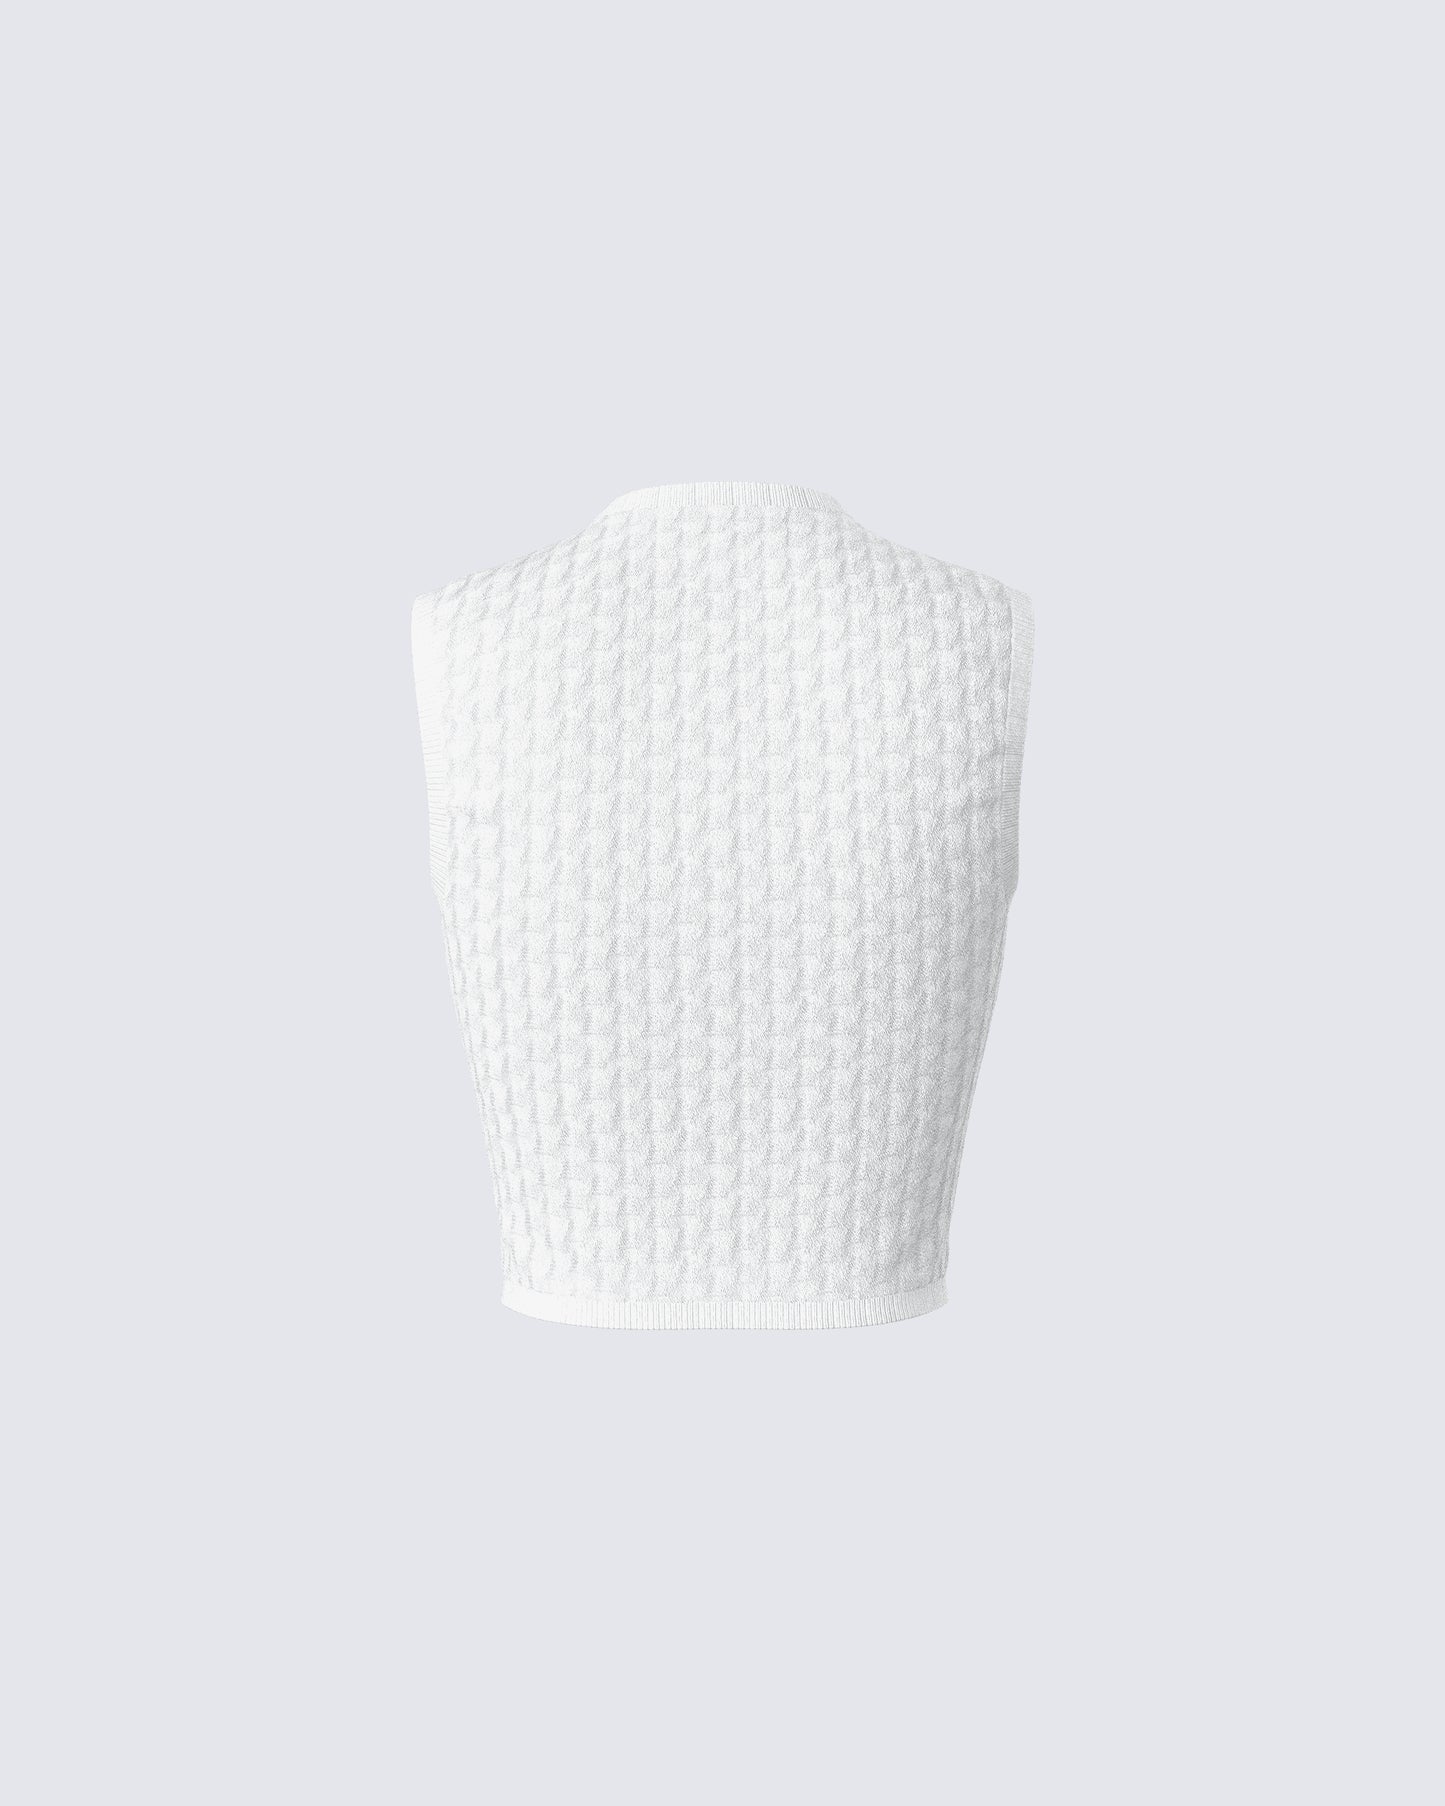 Heidi Ivory Sweater Pattern Top